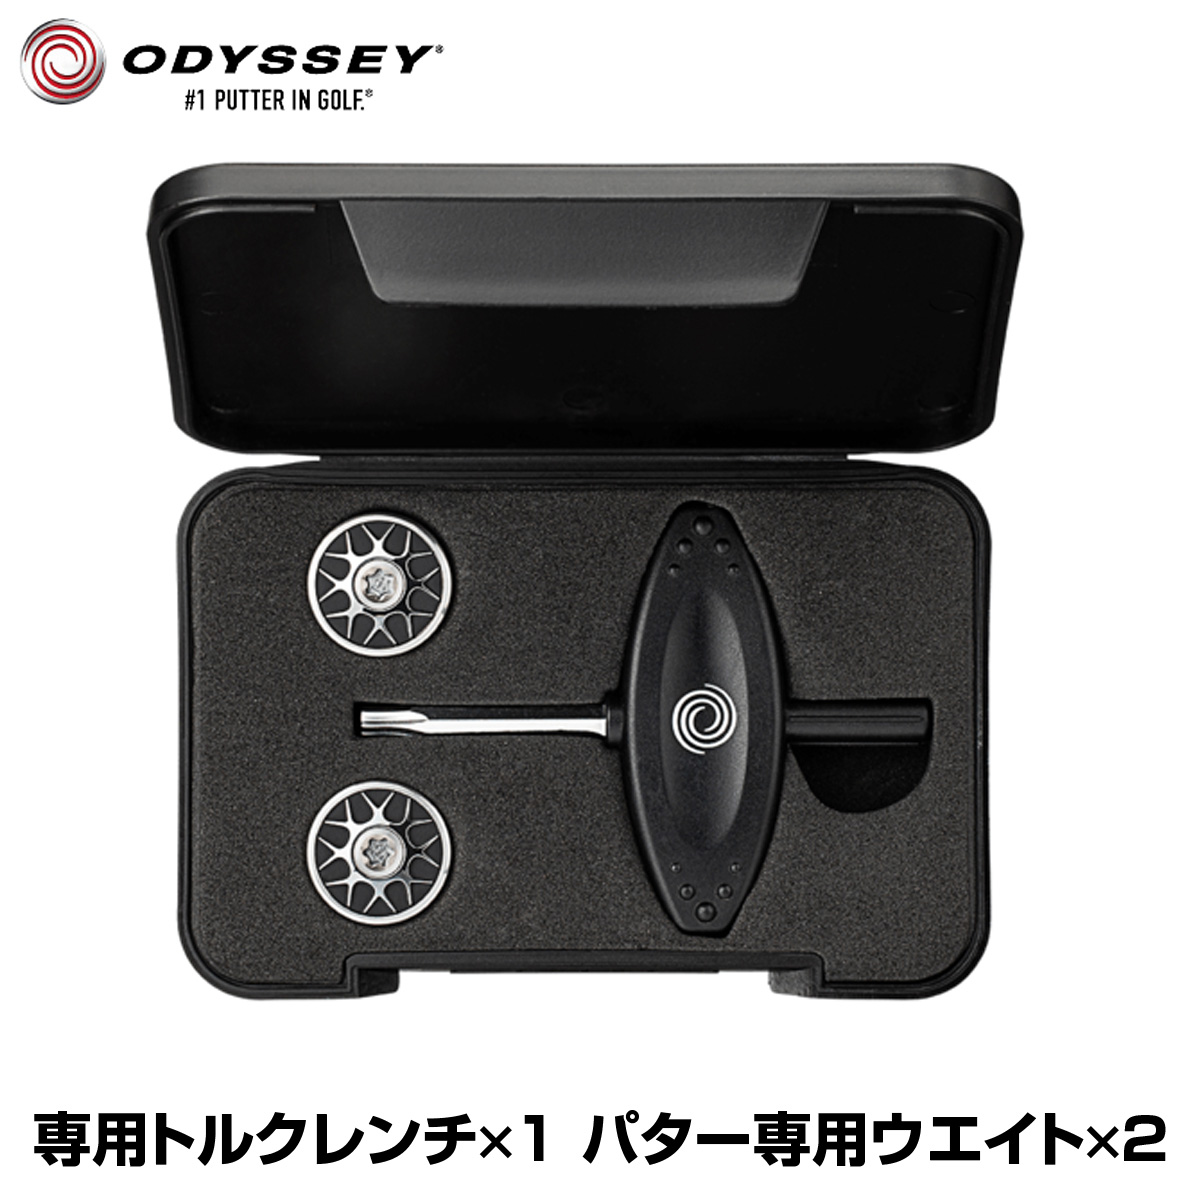 ODYSSEY オデッセイ 日本正規品 オデッセイパター専用 WEIGHT KIT ウェイトキット 専用ケース入り  (専用レンチ×1個、パター専用ウェイト×2個)